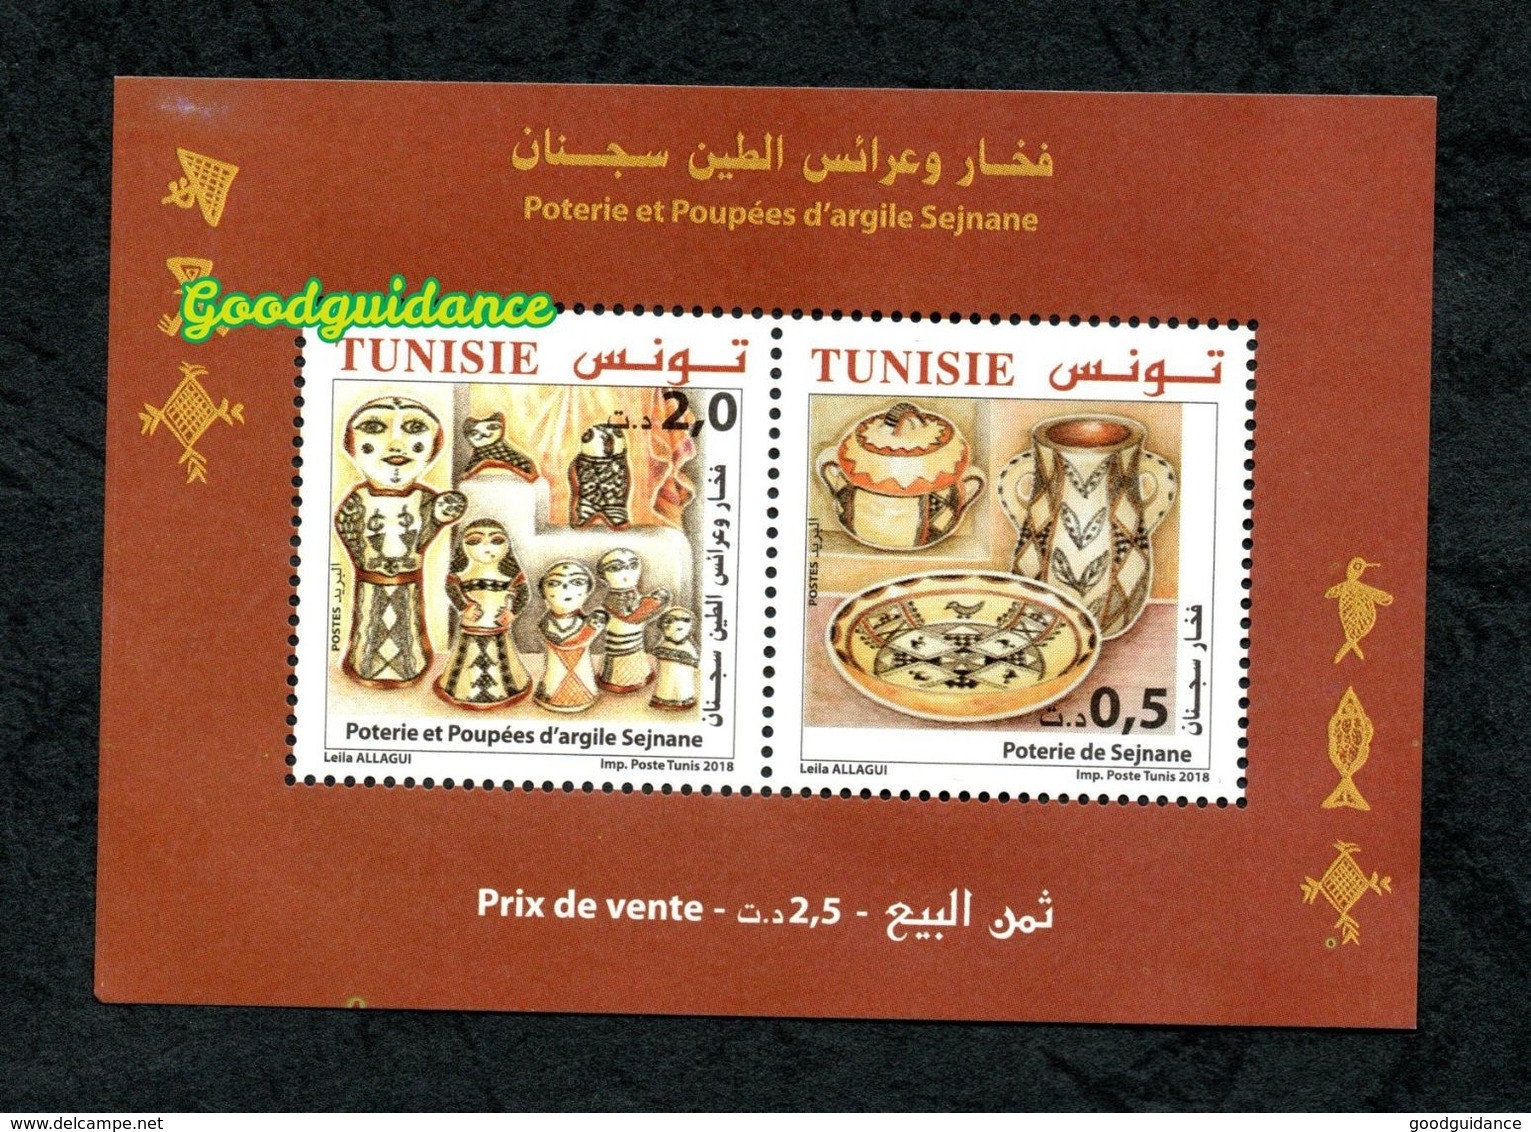 2018- Tunisia- Tunisie- Poterie De Tunise - Pottery Of Tunisia- Perforatd Block - Block Perforé- MNH** - Porzellan